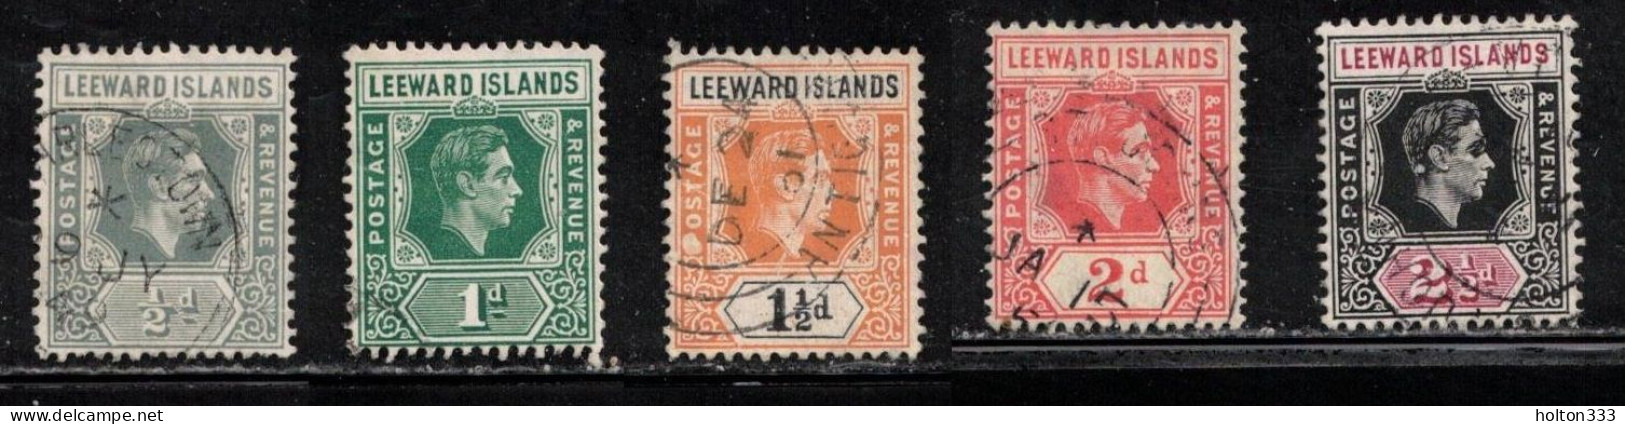 LEEWARD ISLANDS Scott # 120-4 Used - KGVI - Leeward  Islands